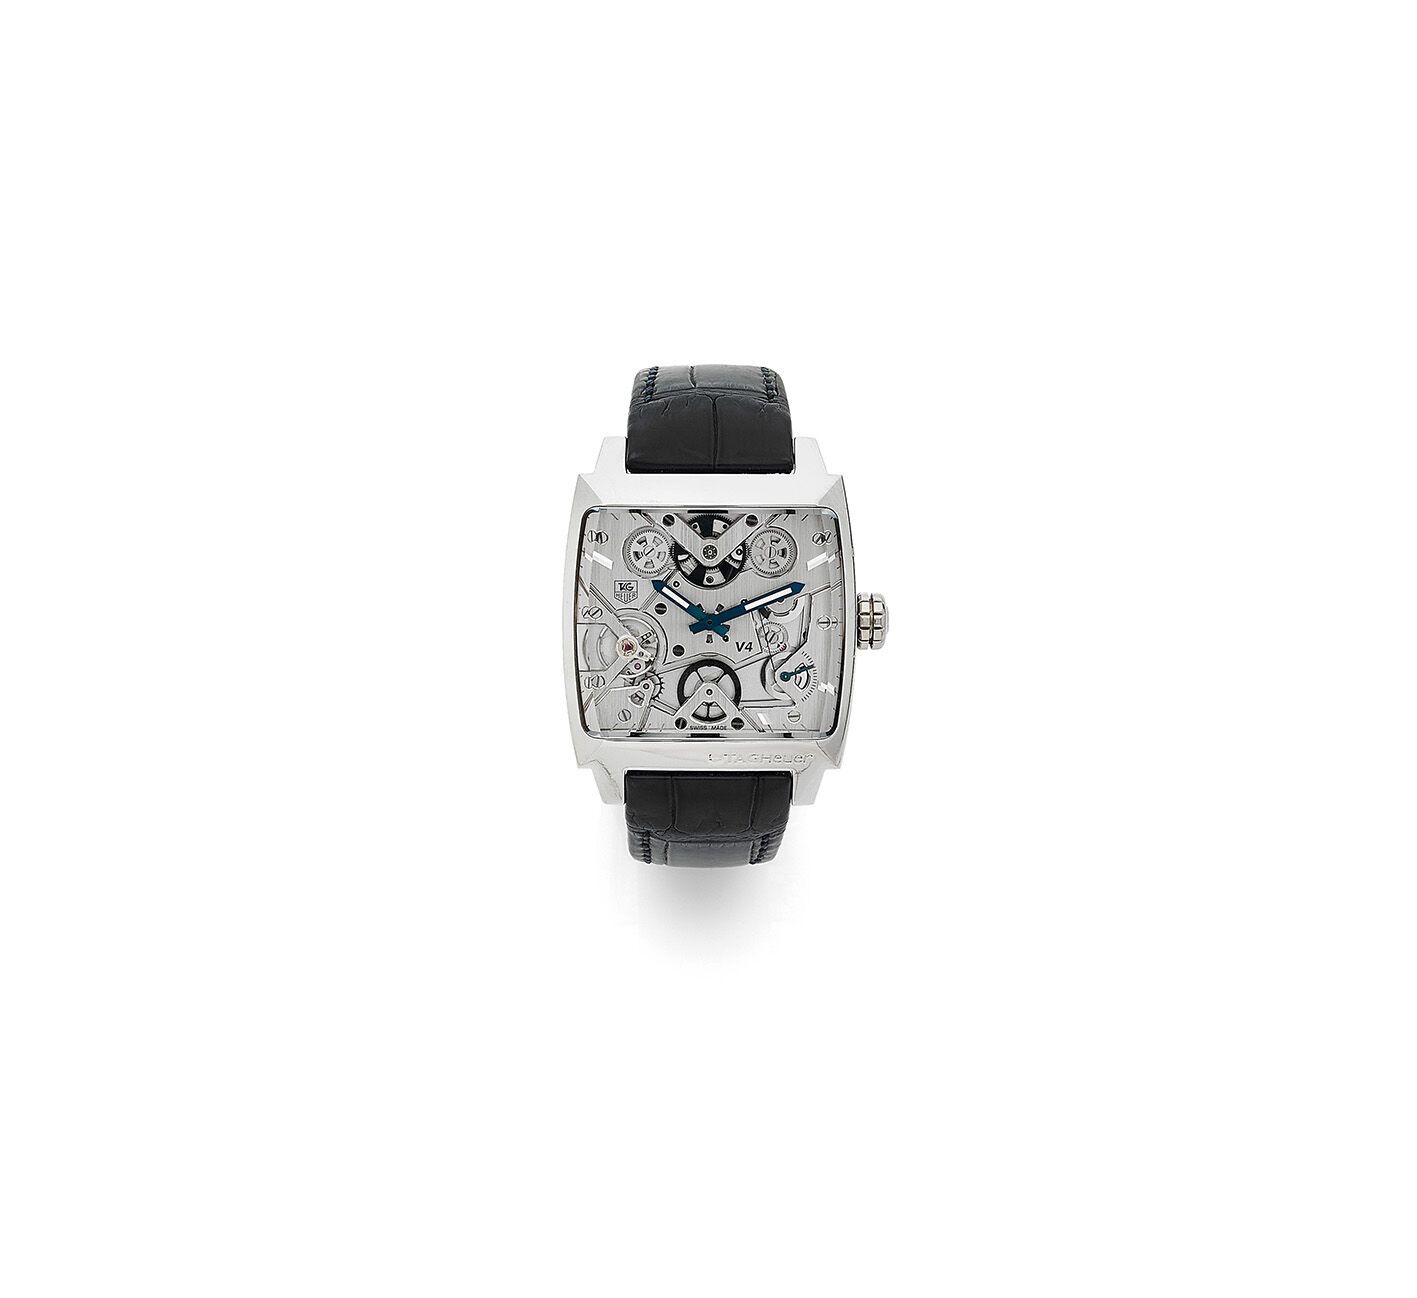 TAG HEUER V4 PLATINE TAG HEUER V4 PLATINUM
Men's wristwatch in platinum (950 tho&hellip;